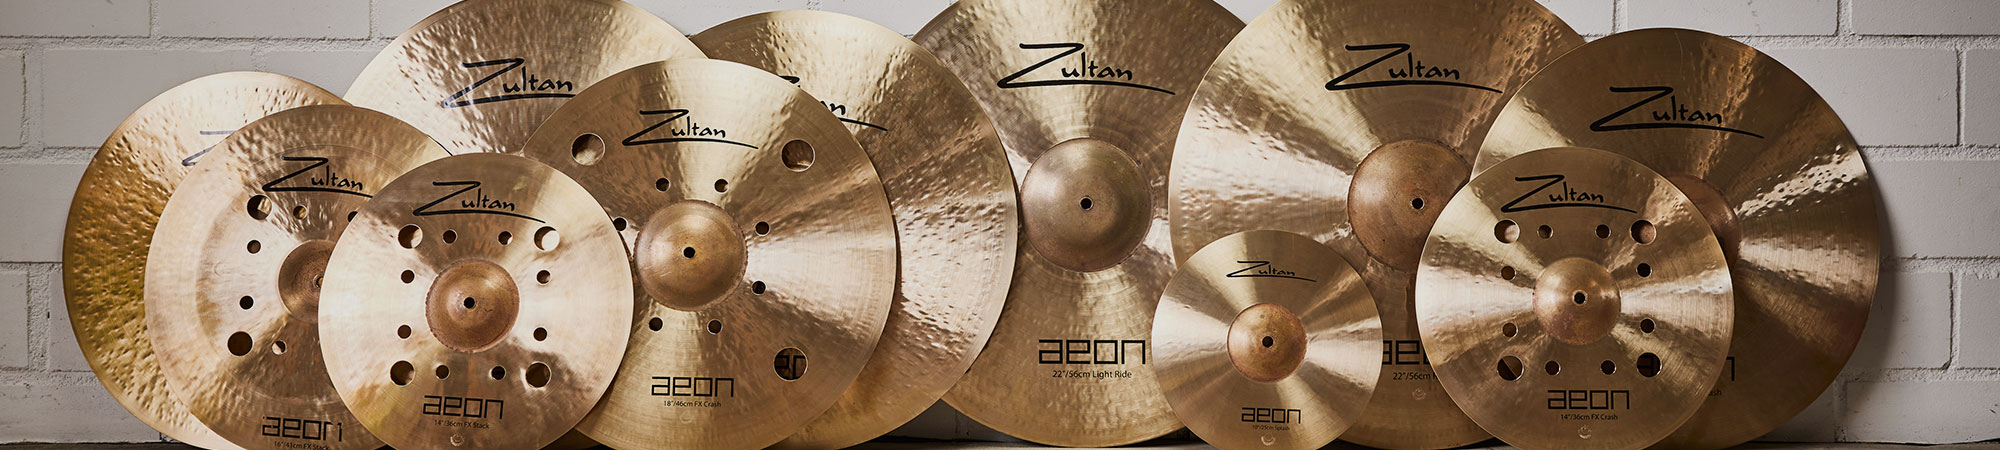 Zultan Cymbals AEON Series